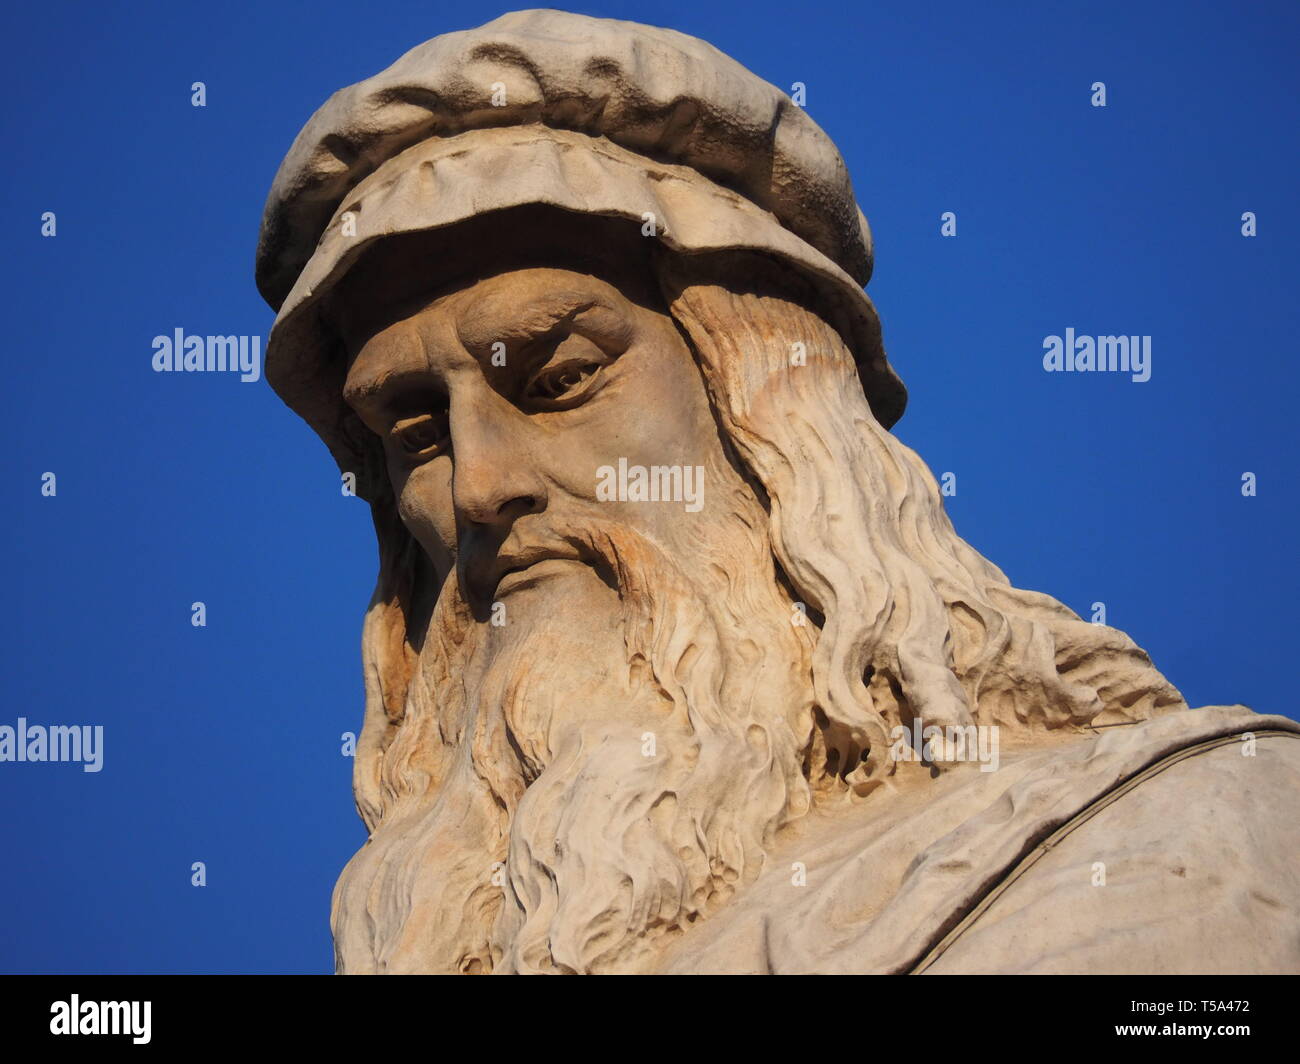 La sculpture de Léonard de Vinci dans la place Piazza della Scala, Milan. Banque D'Images